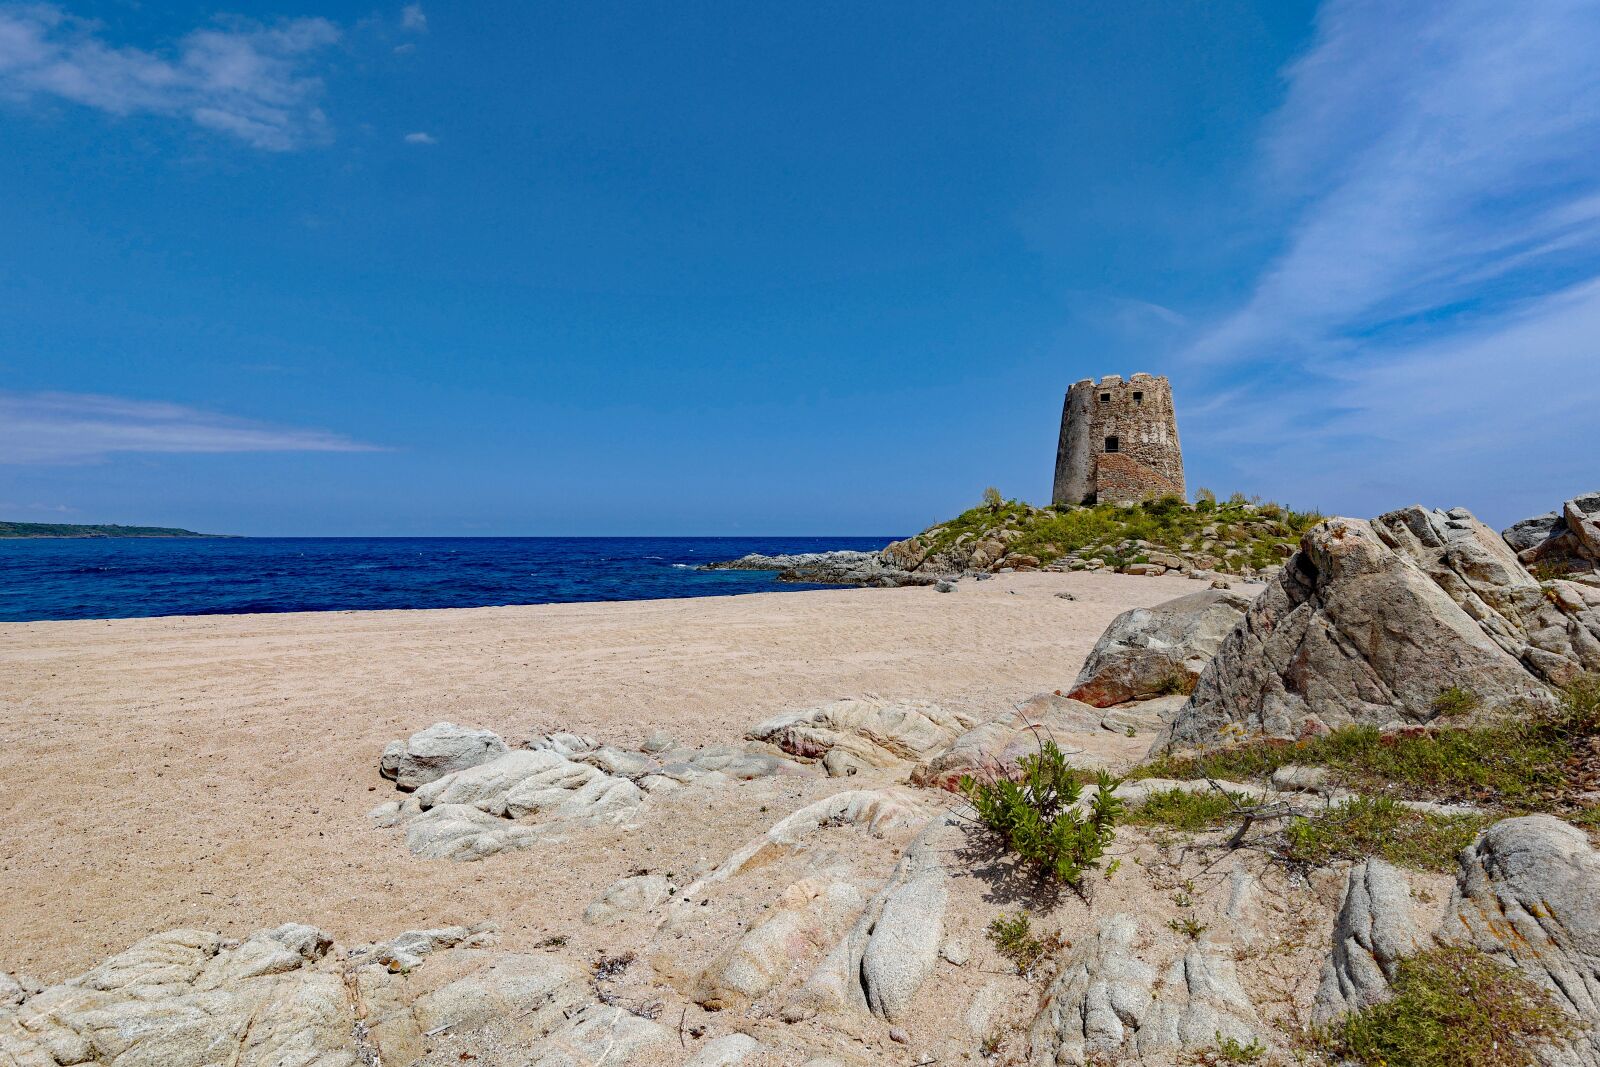 Super-Vario-Elmar-TL  1:3.5-4.5 / 11-23 ASPH. sample photo. Sardinia, beach, torre di photography